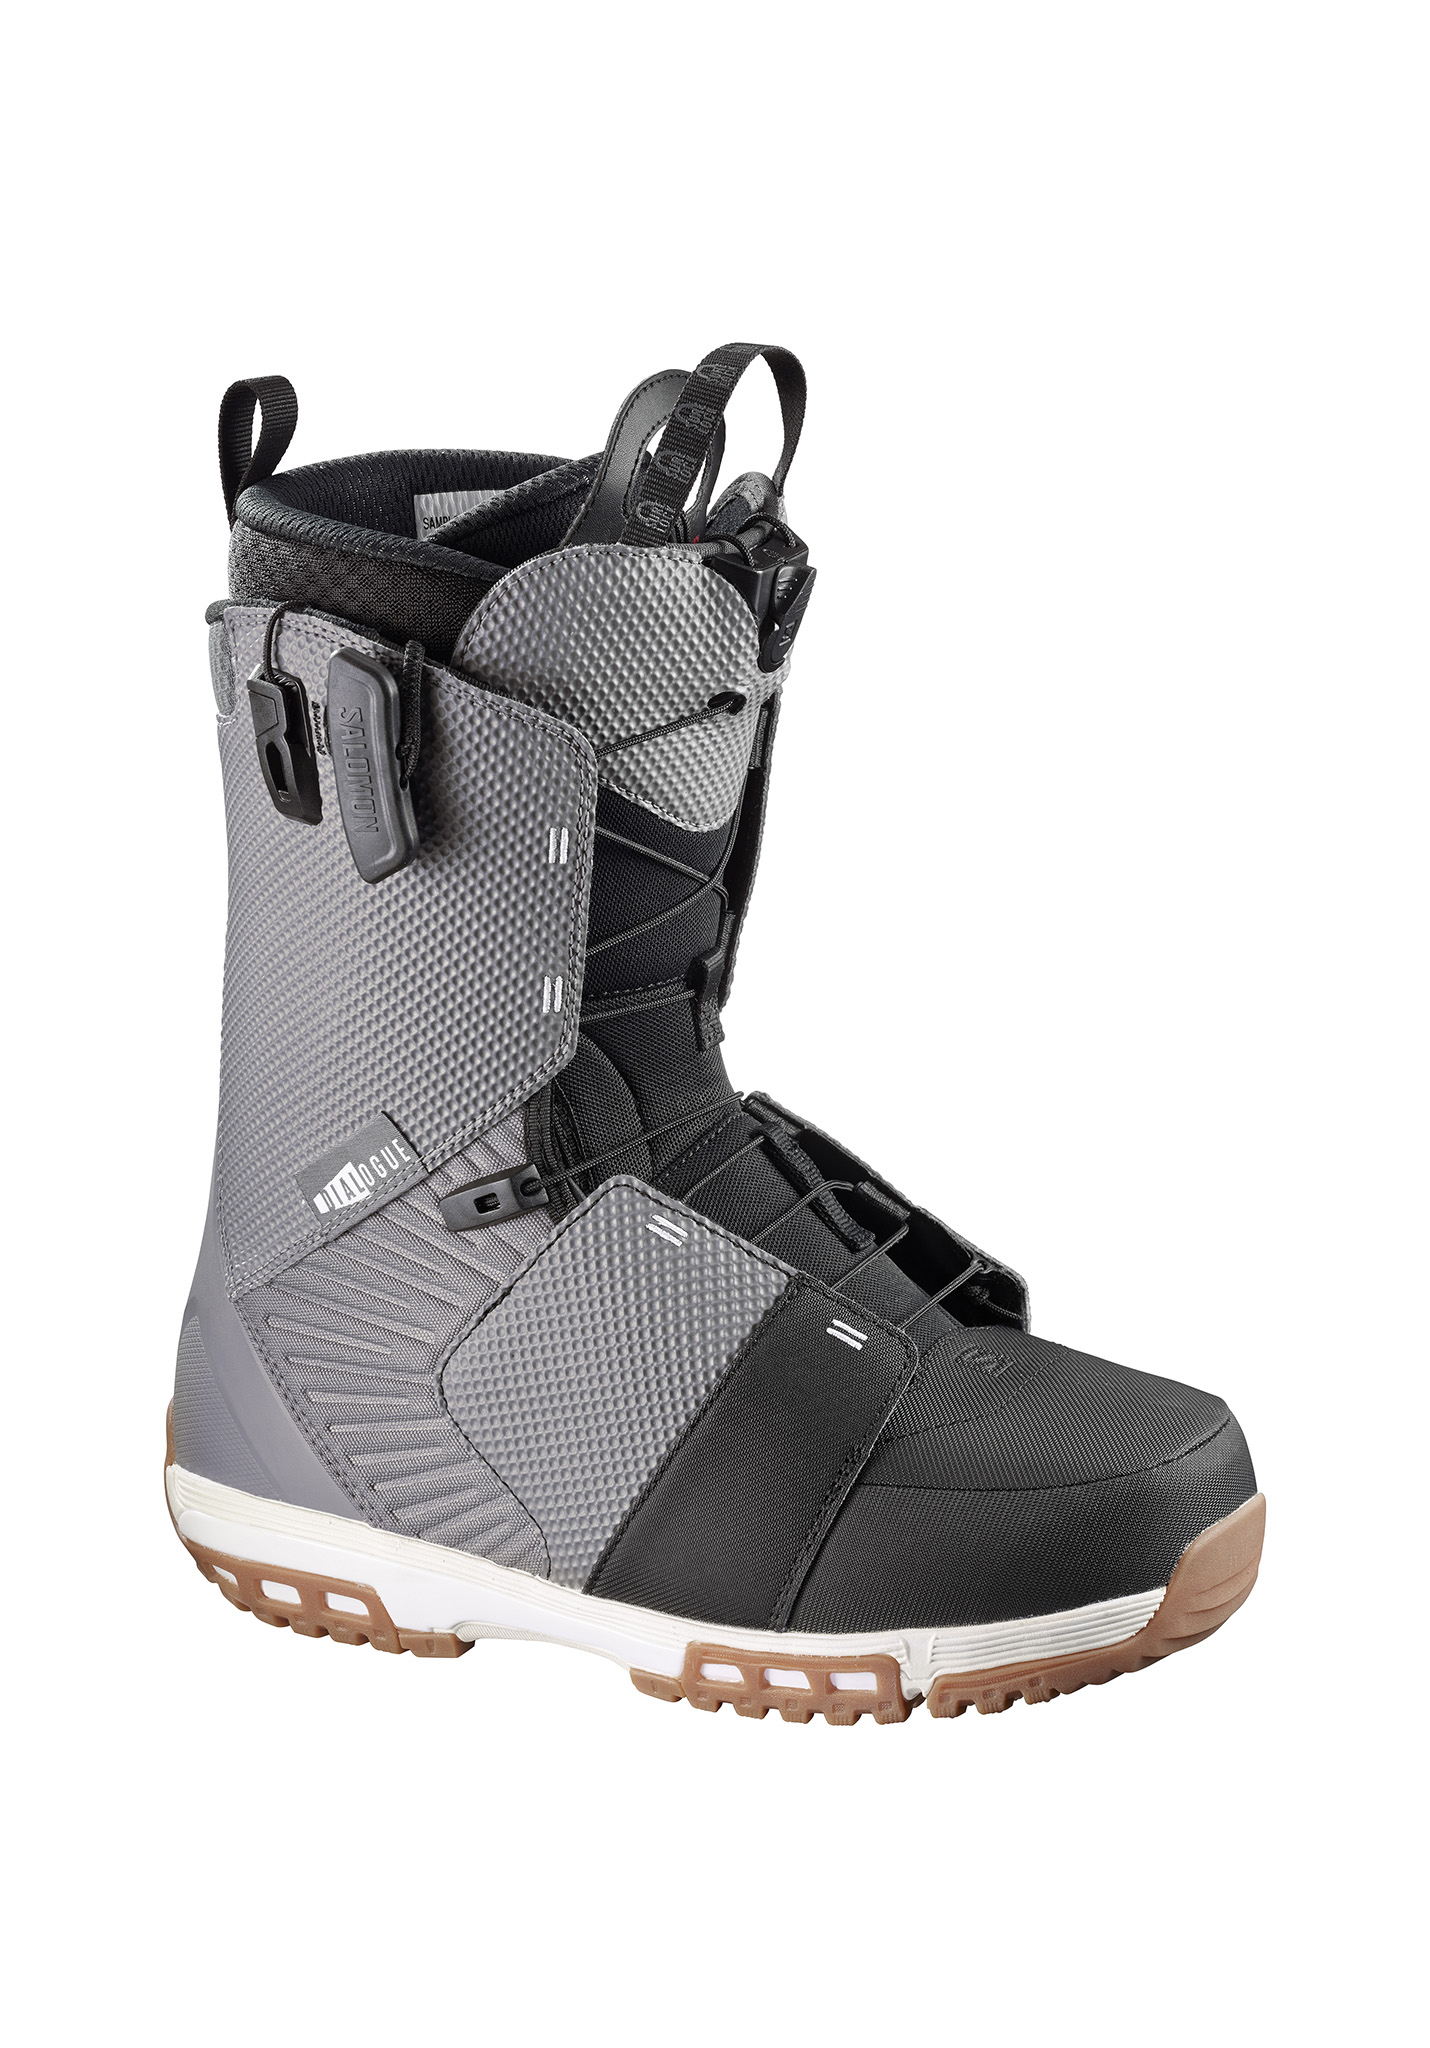 Salomon Dialogue Snowboard Boots detroit/black/white 45,5